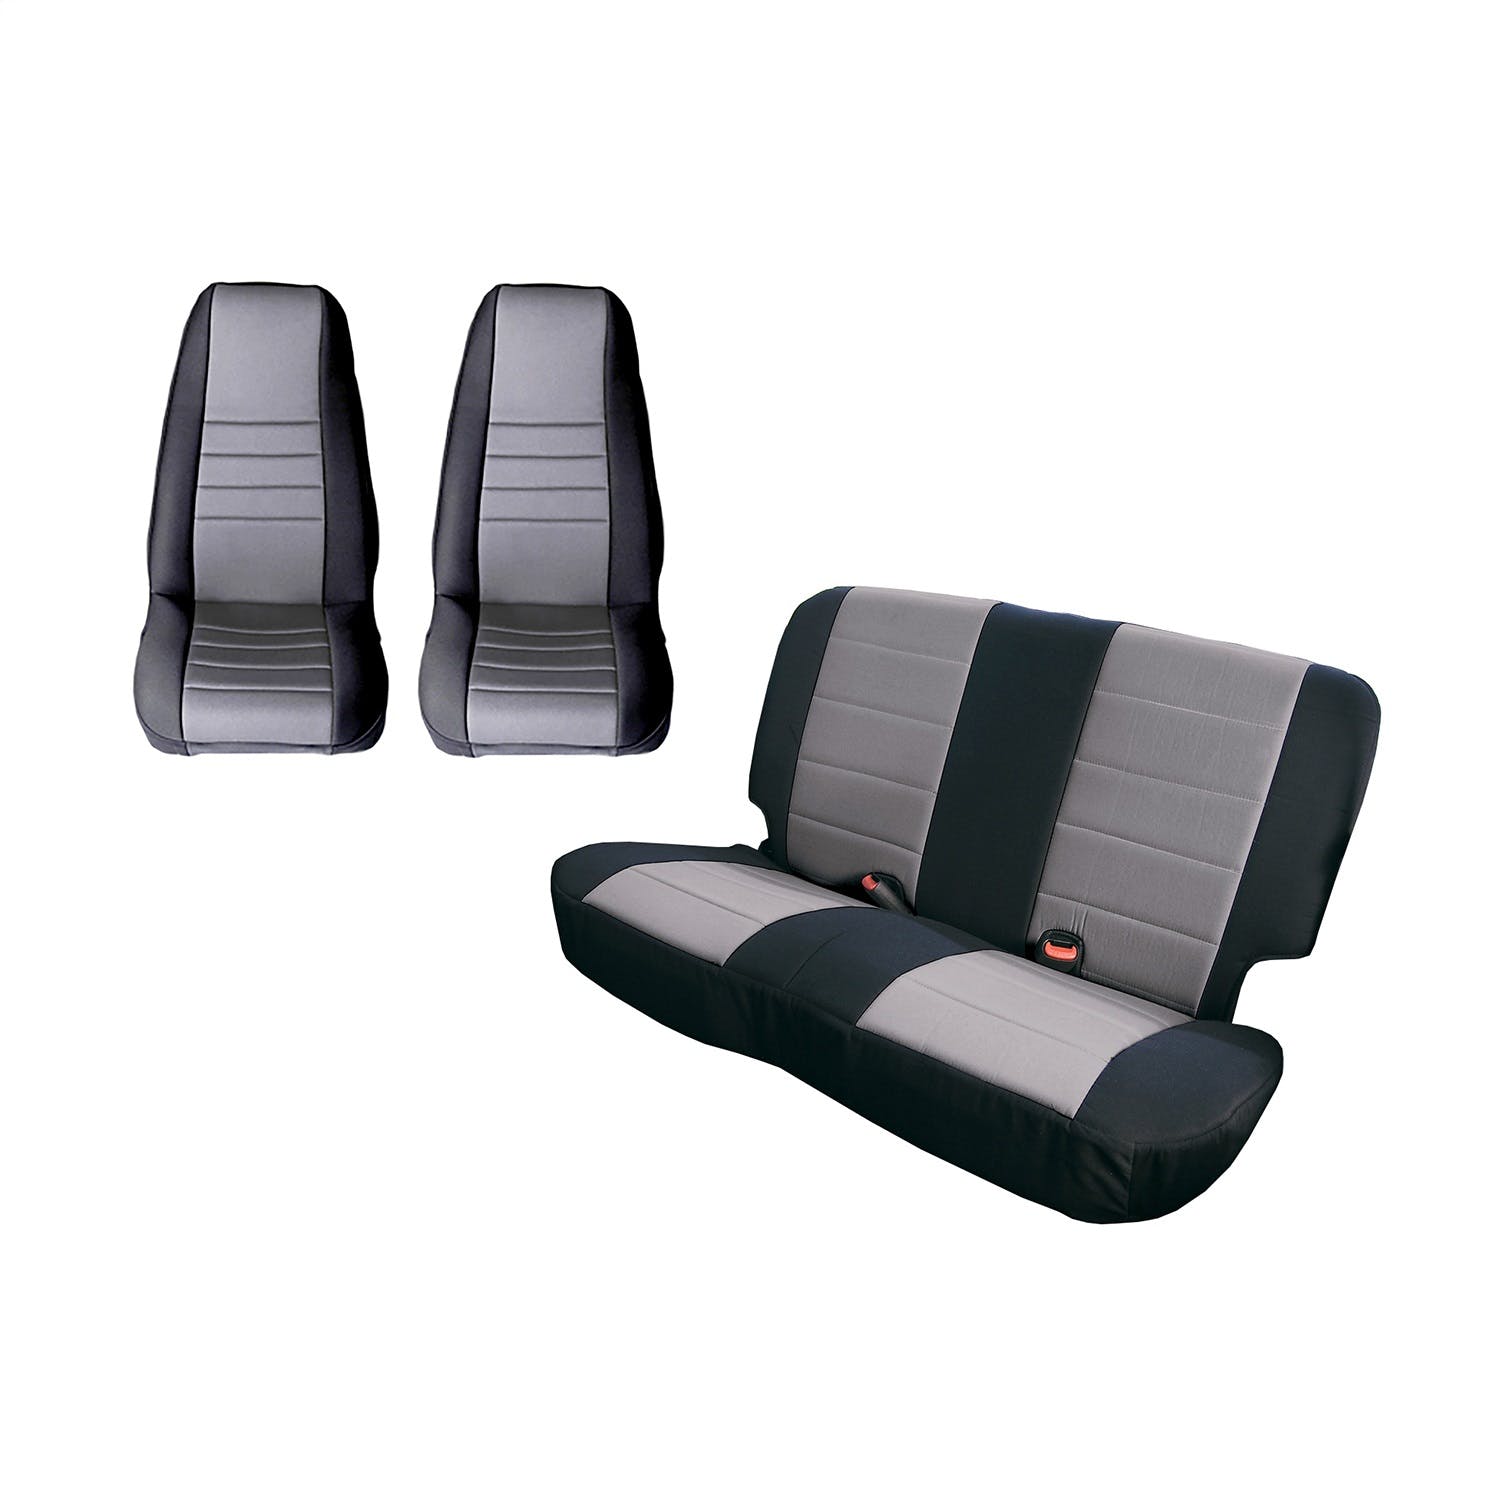 Rugged Ridge 13290.09 Seat Cover Kit, Black/Gray